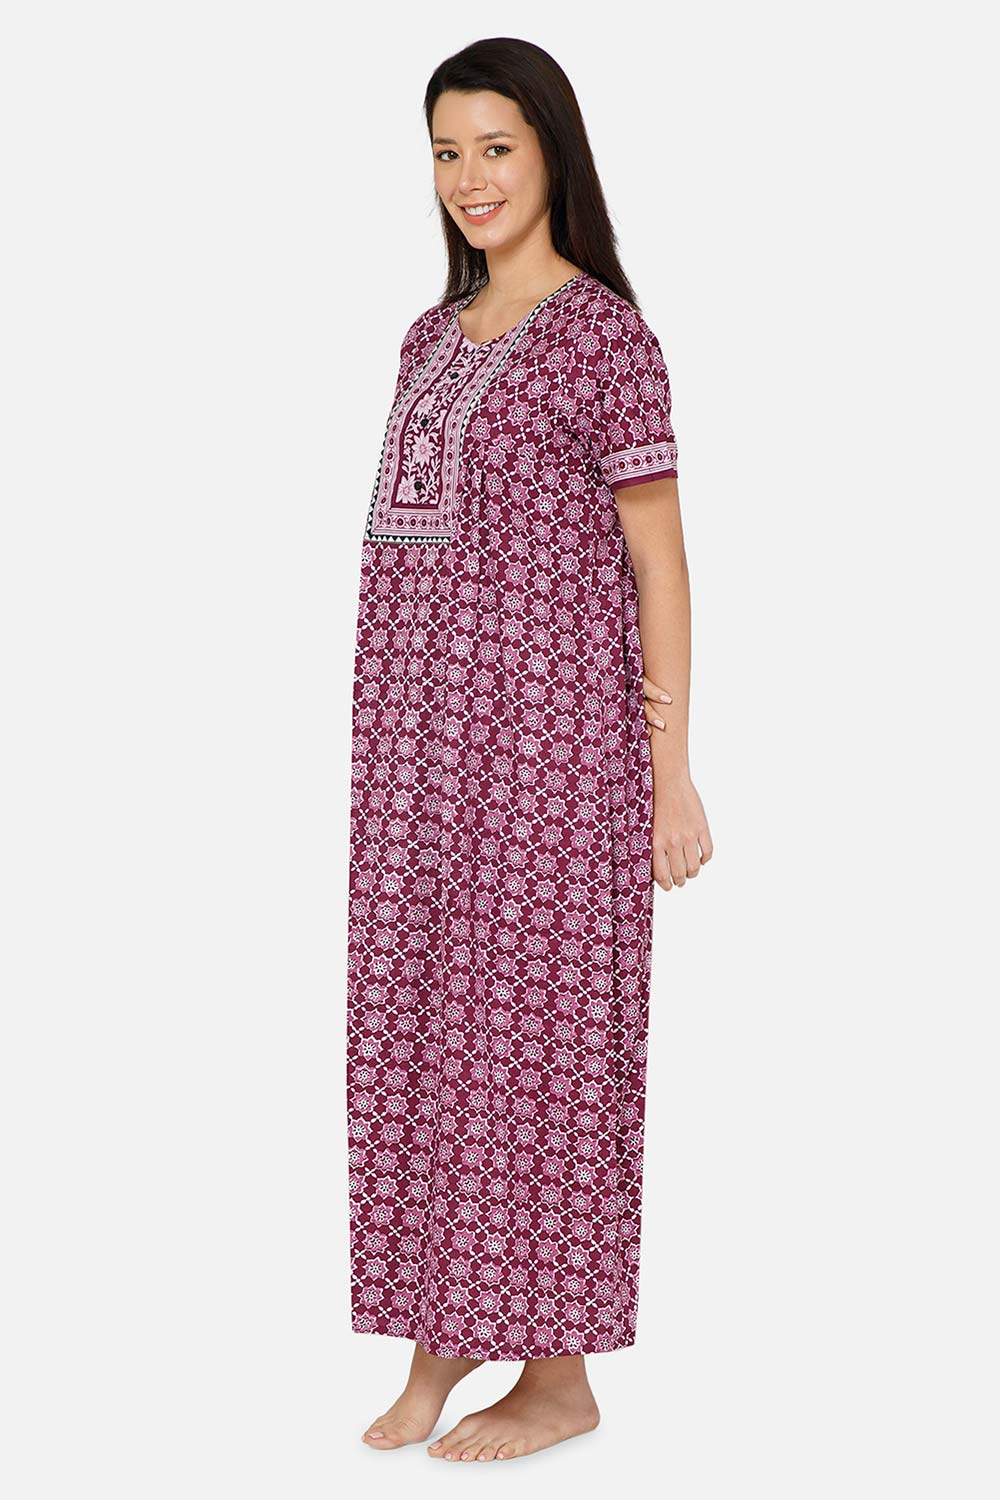 Naidu Hall A-line Women's Nighty Full Length Half Sleeve  - Purple - R136